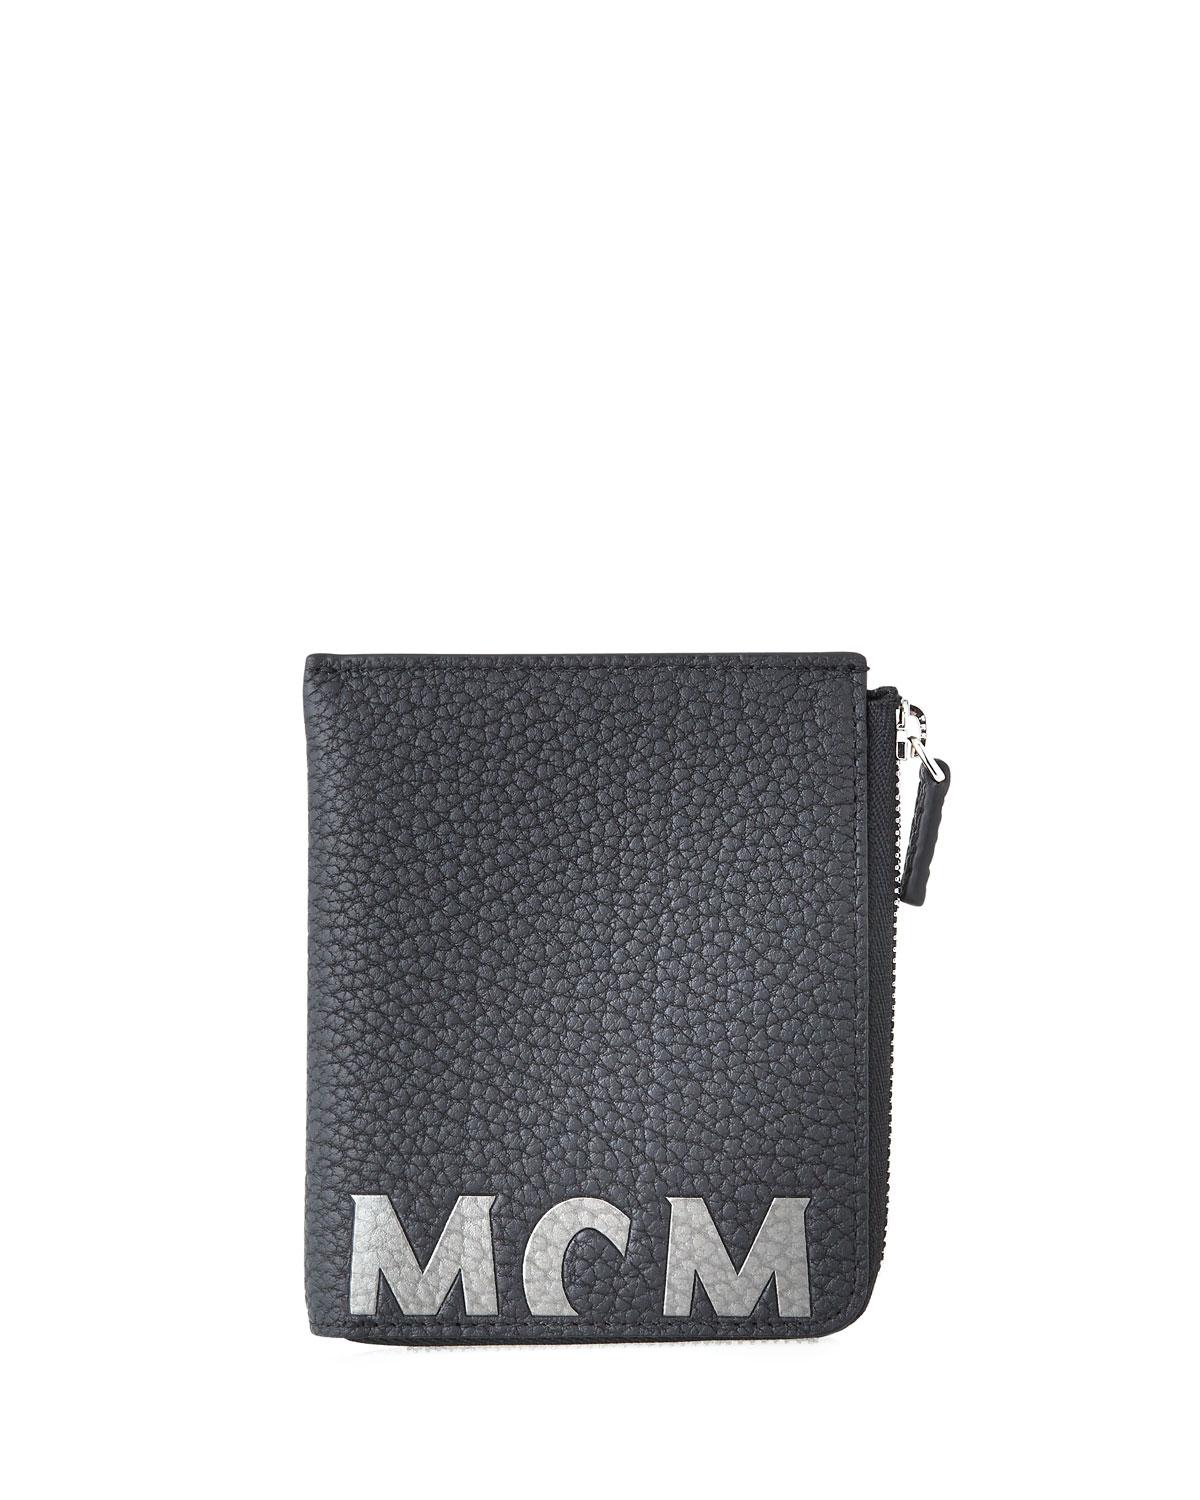 MCM Men's Big Logo Leather Zip Wallet in Black for Men - Lyst